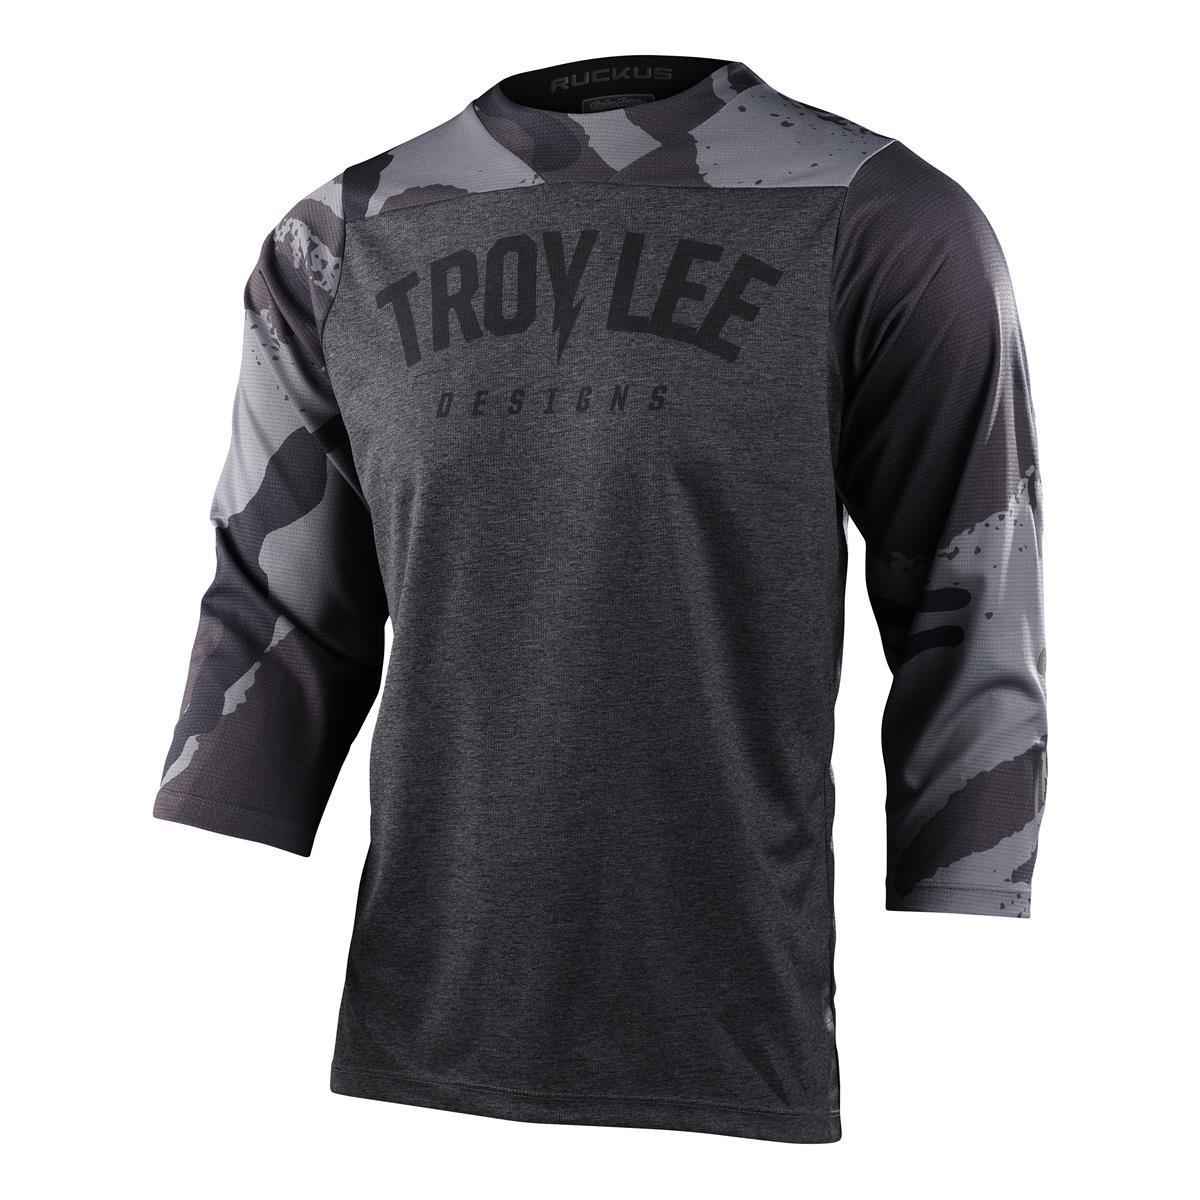 Troy Lee Designs MTB Jersey ¾ Sleeve Ruckus Camber Camo - Black Heather